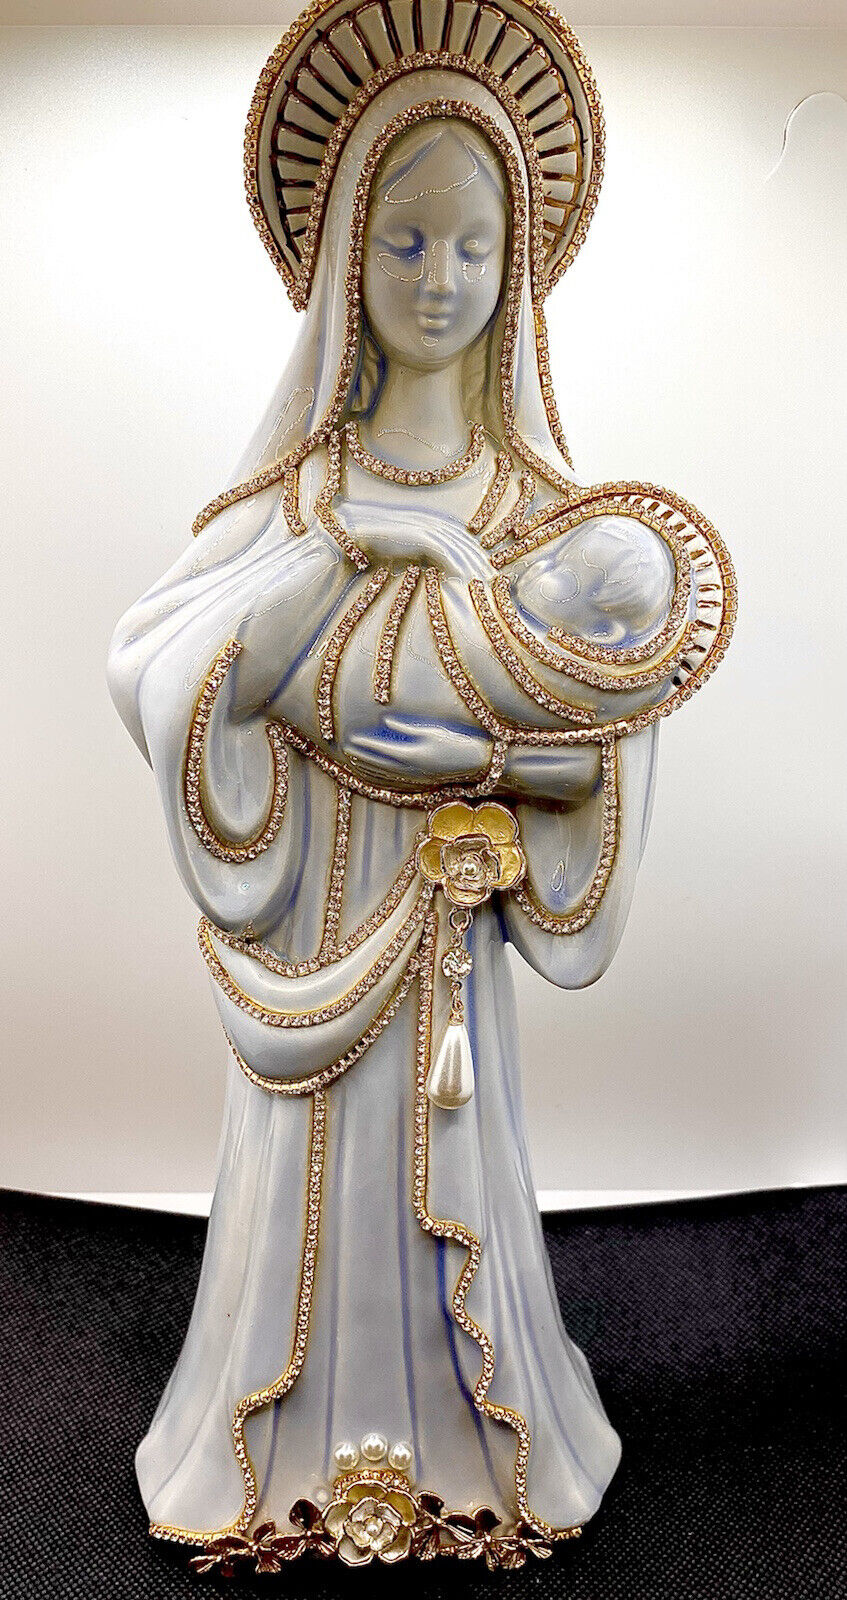 Vintage Virgin Mary Ceramic Figurine with Embellishments